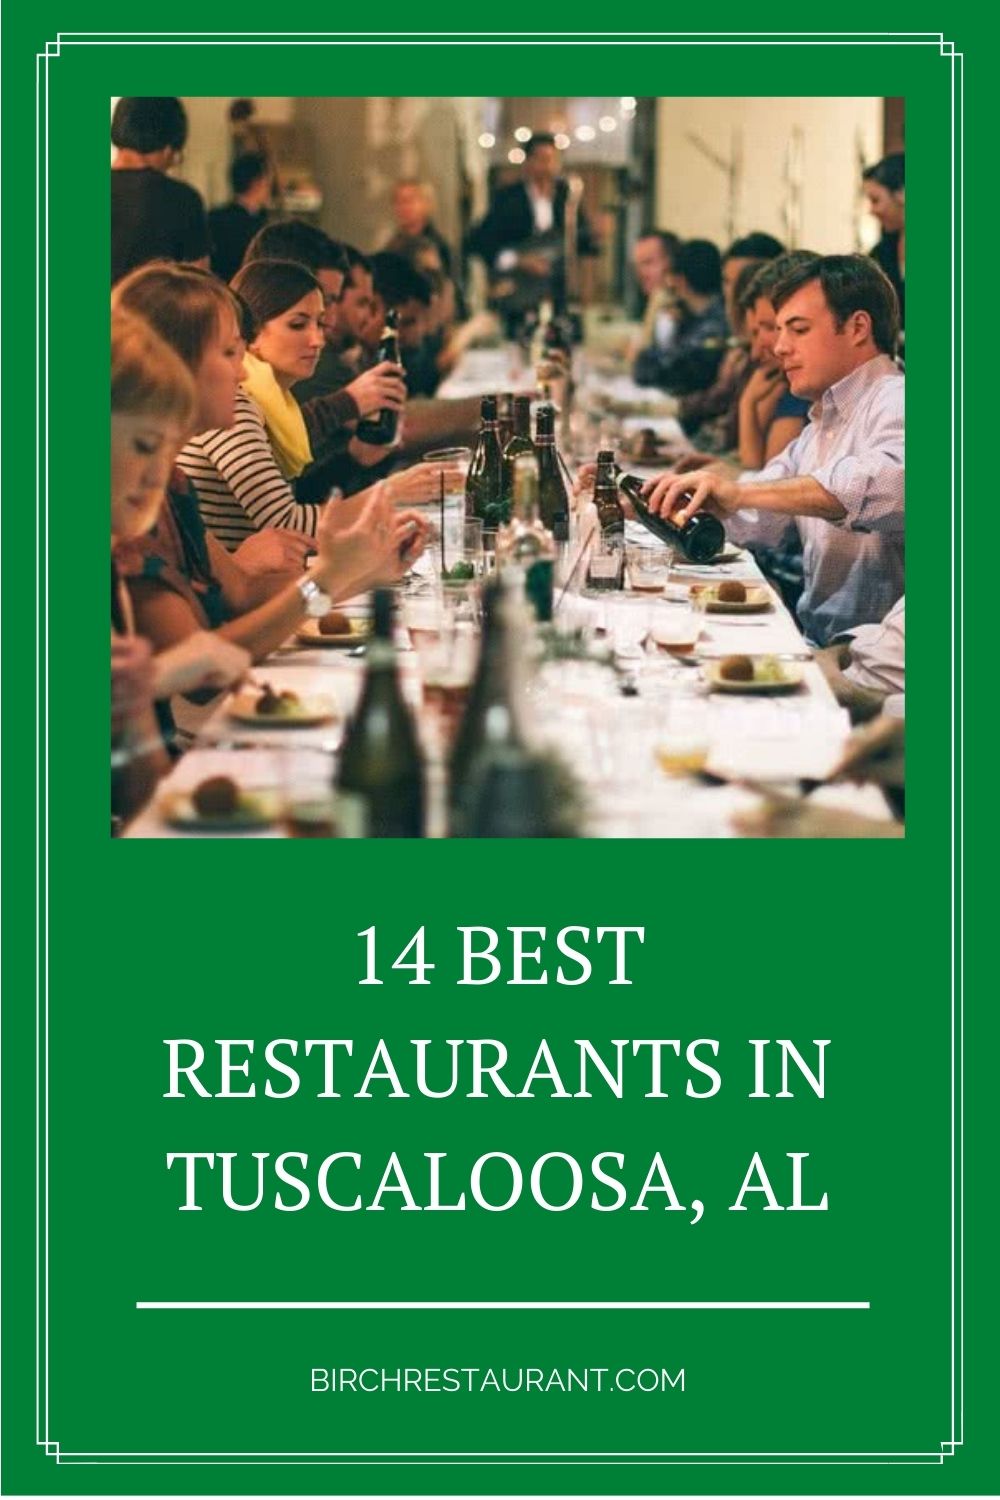 Best Restaurants in Tuscaloosa